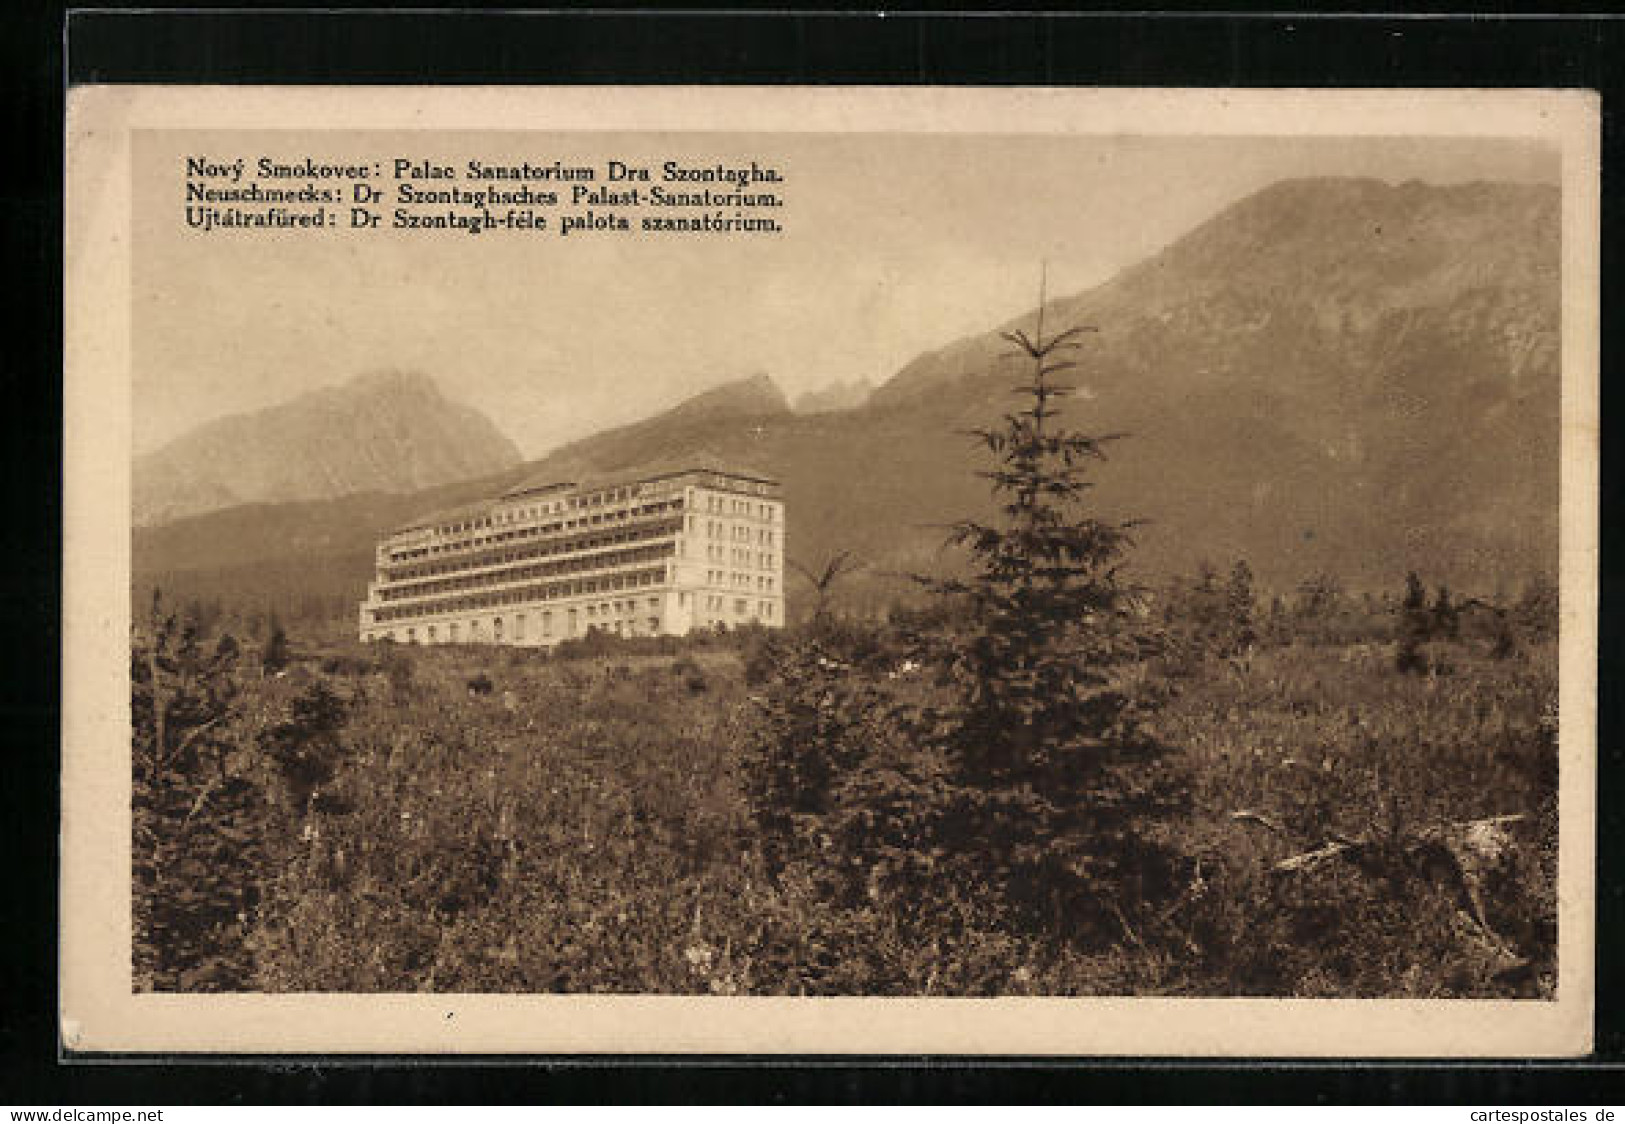 AK Neuschmecks, Dr. Szontaghsches Palast-Sanatorium  - Slovakia